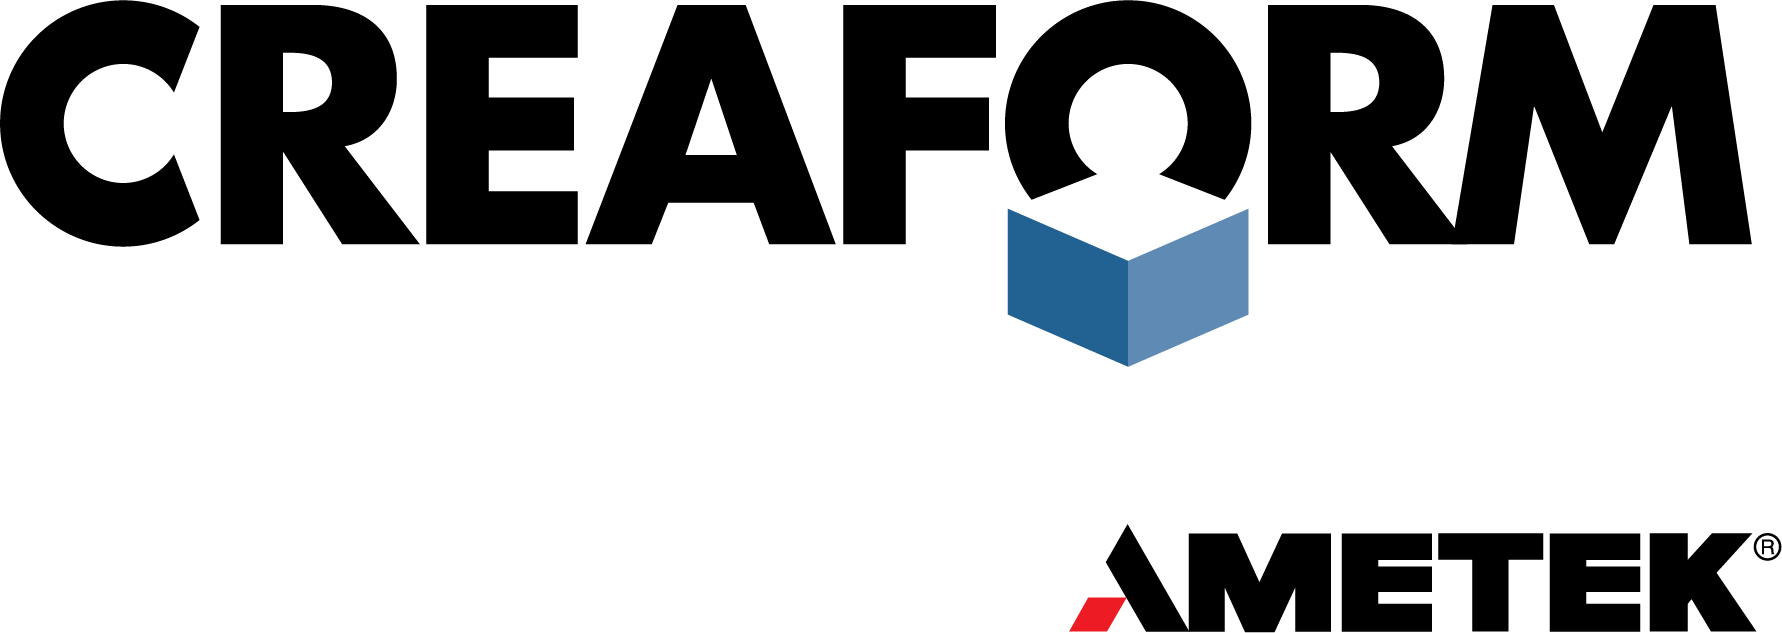 Creaform-AMETEK_logo